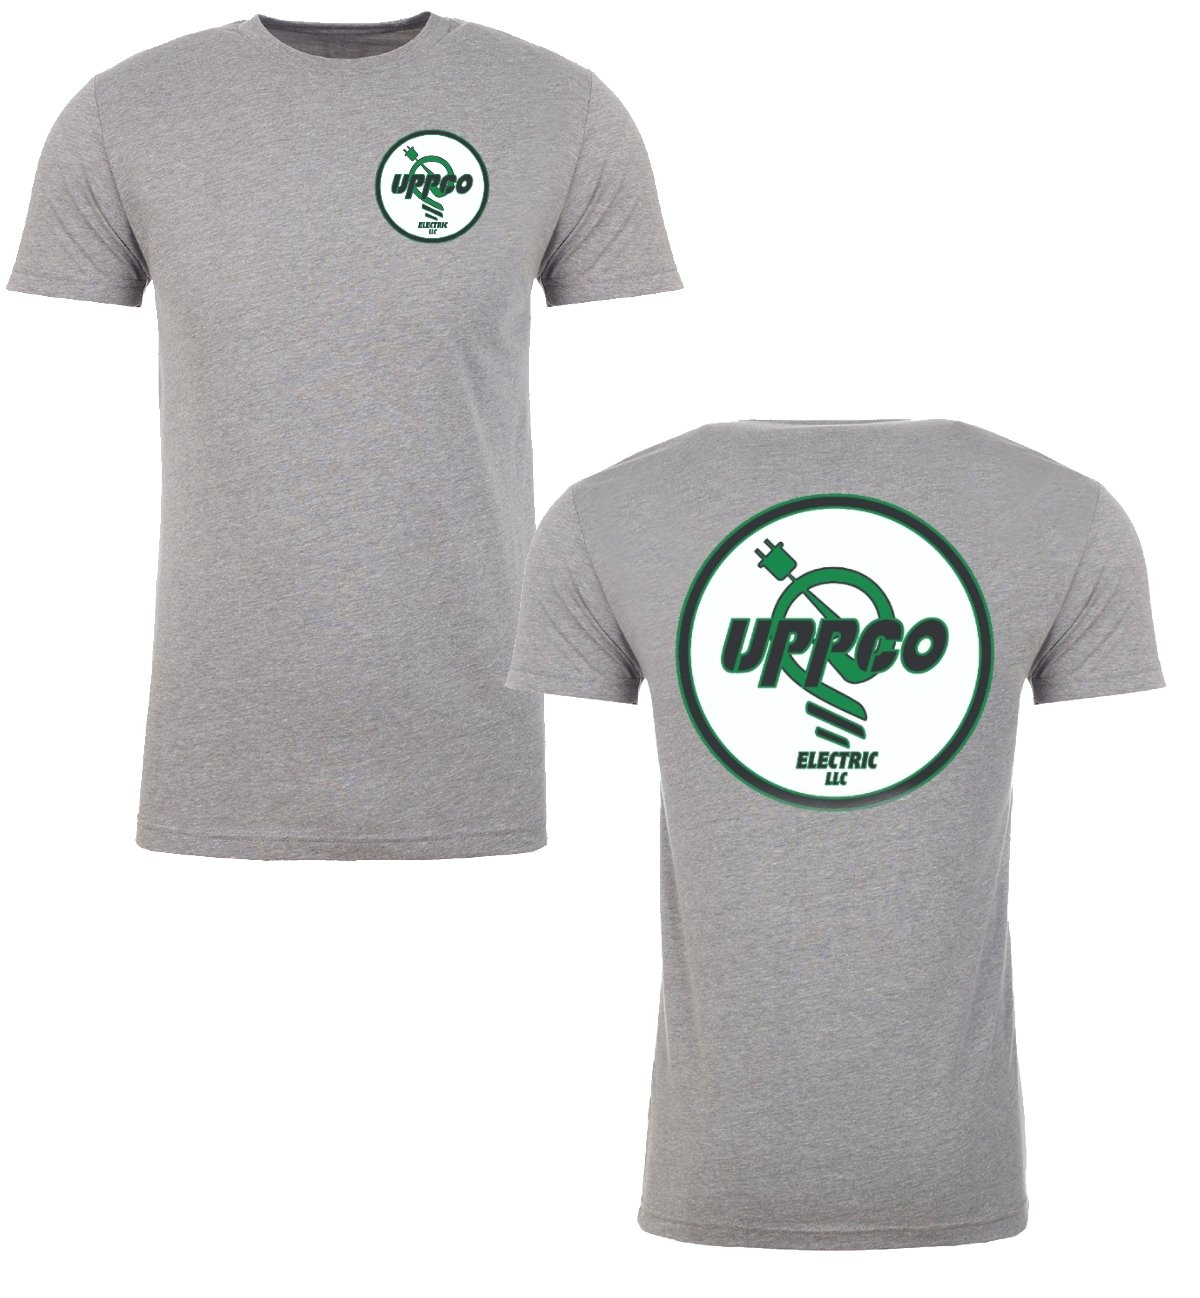 Uppco Electric T Shirts - Mato & Hash